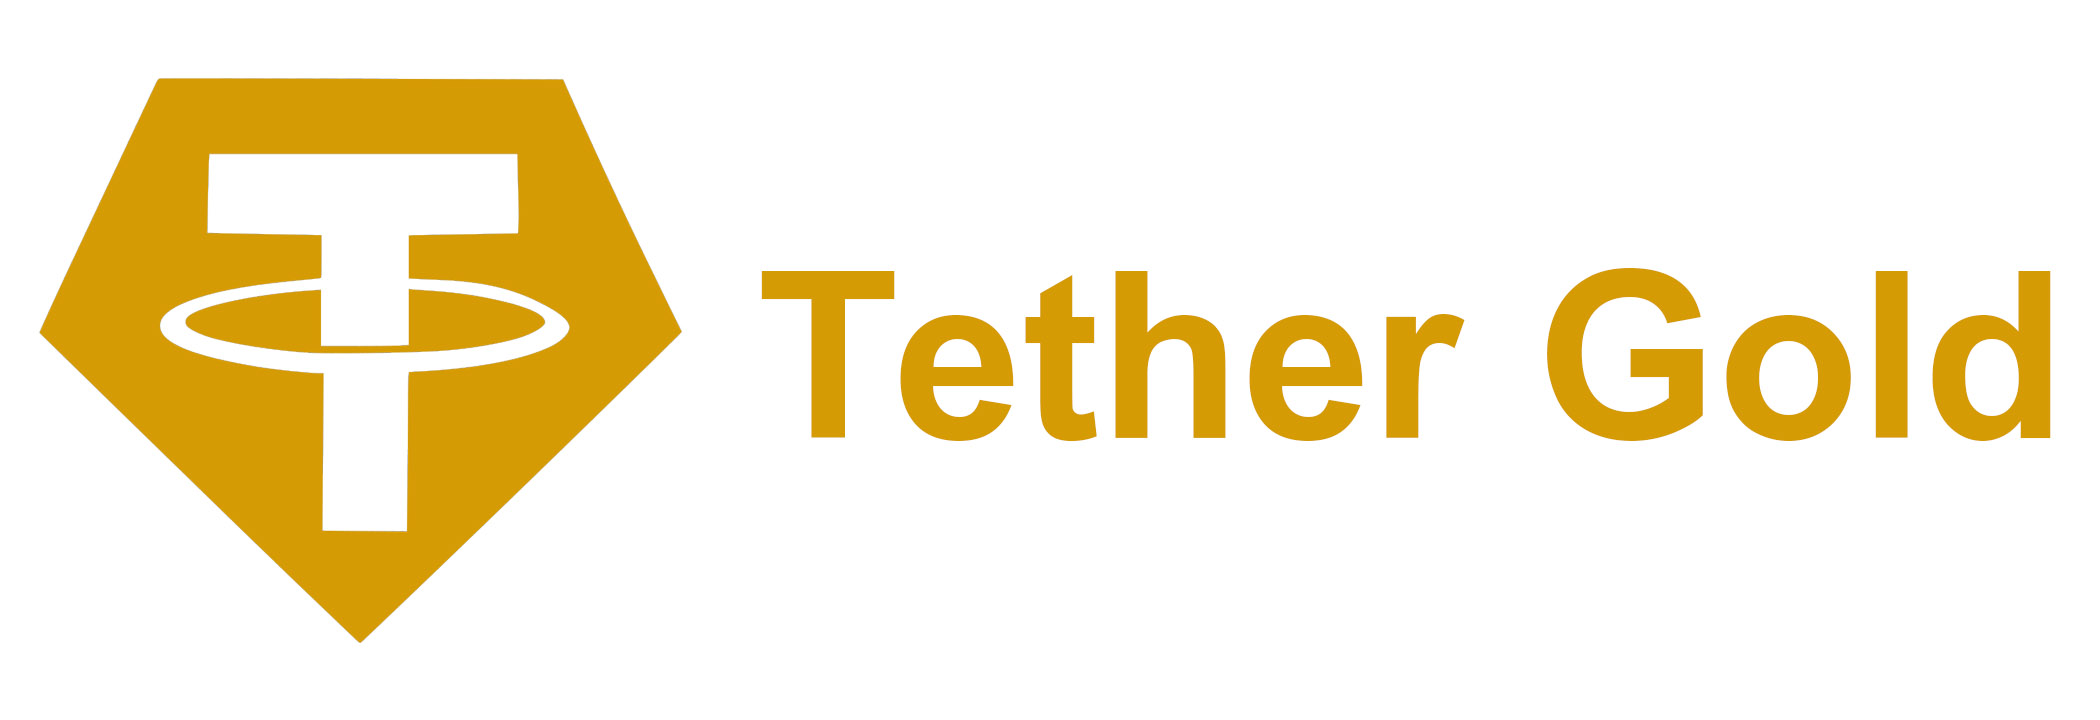 Tether gold XAUT - تترگلد صدرنشین شد